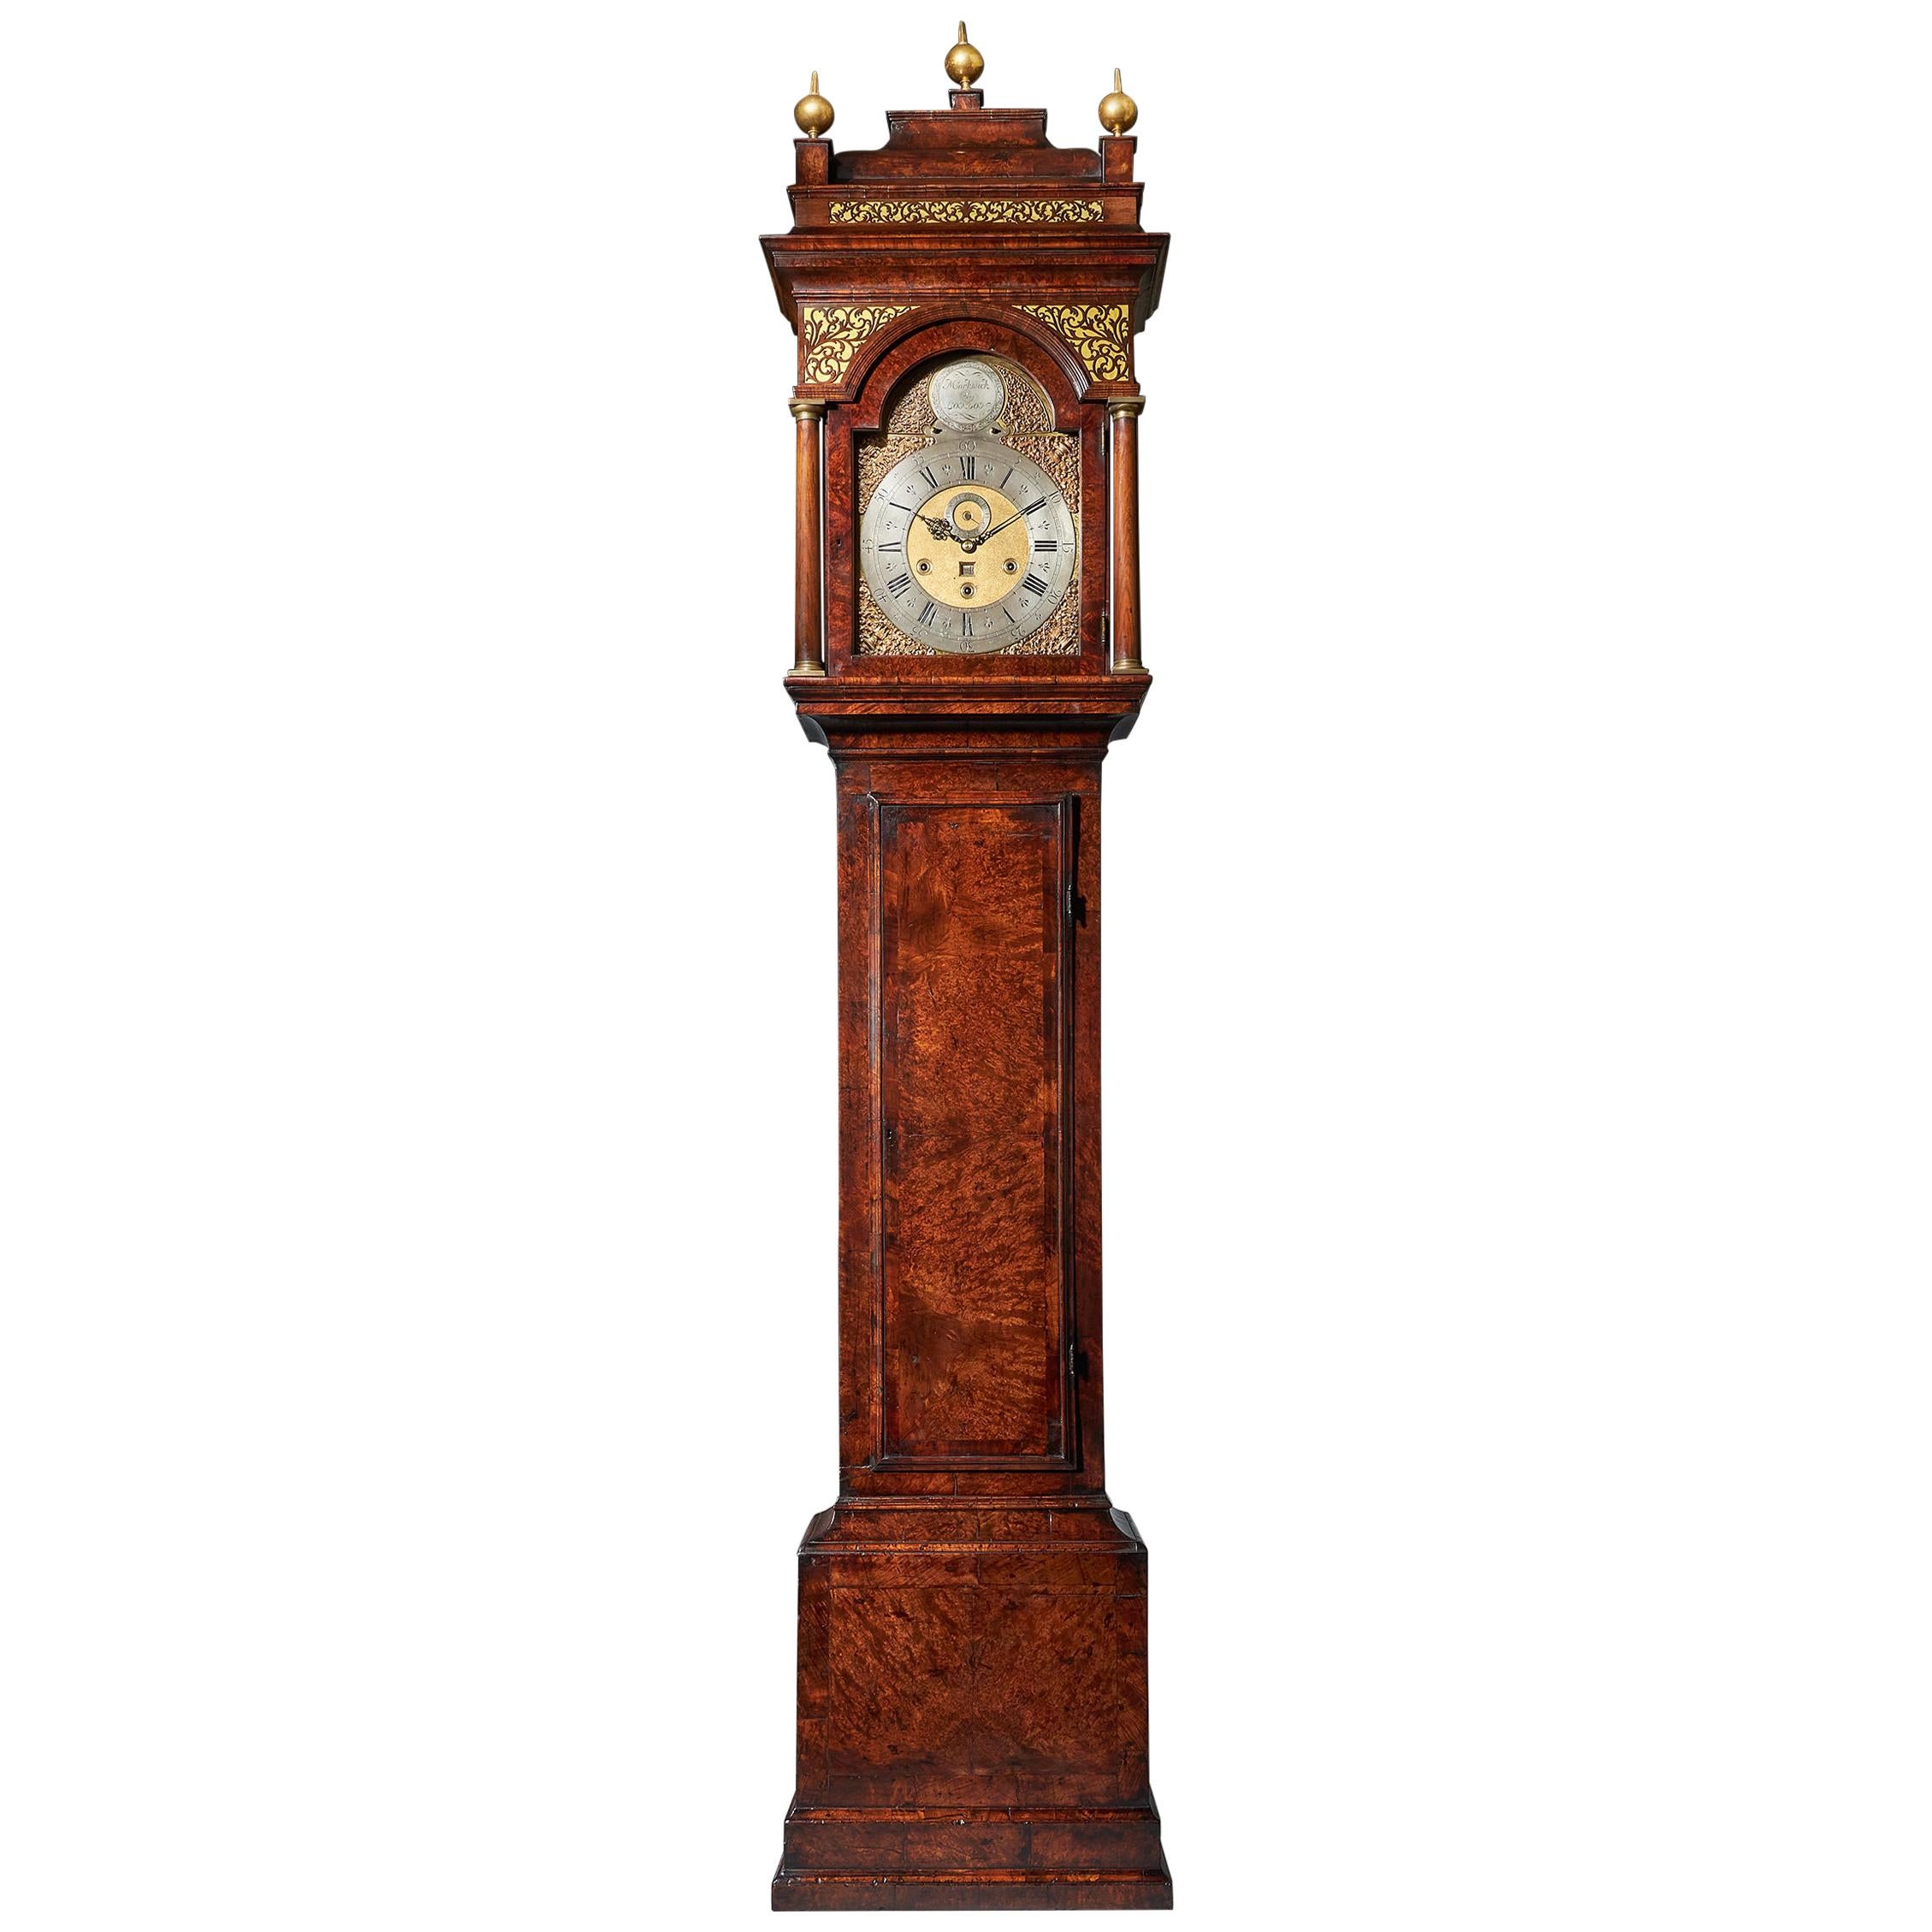 The 10.12ft 18th Century George I Bur/Burl Walnut Month Longcase Clock by James Markwick 1